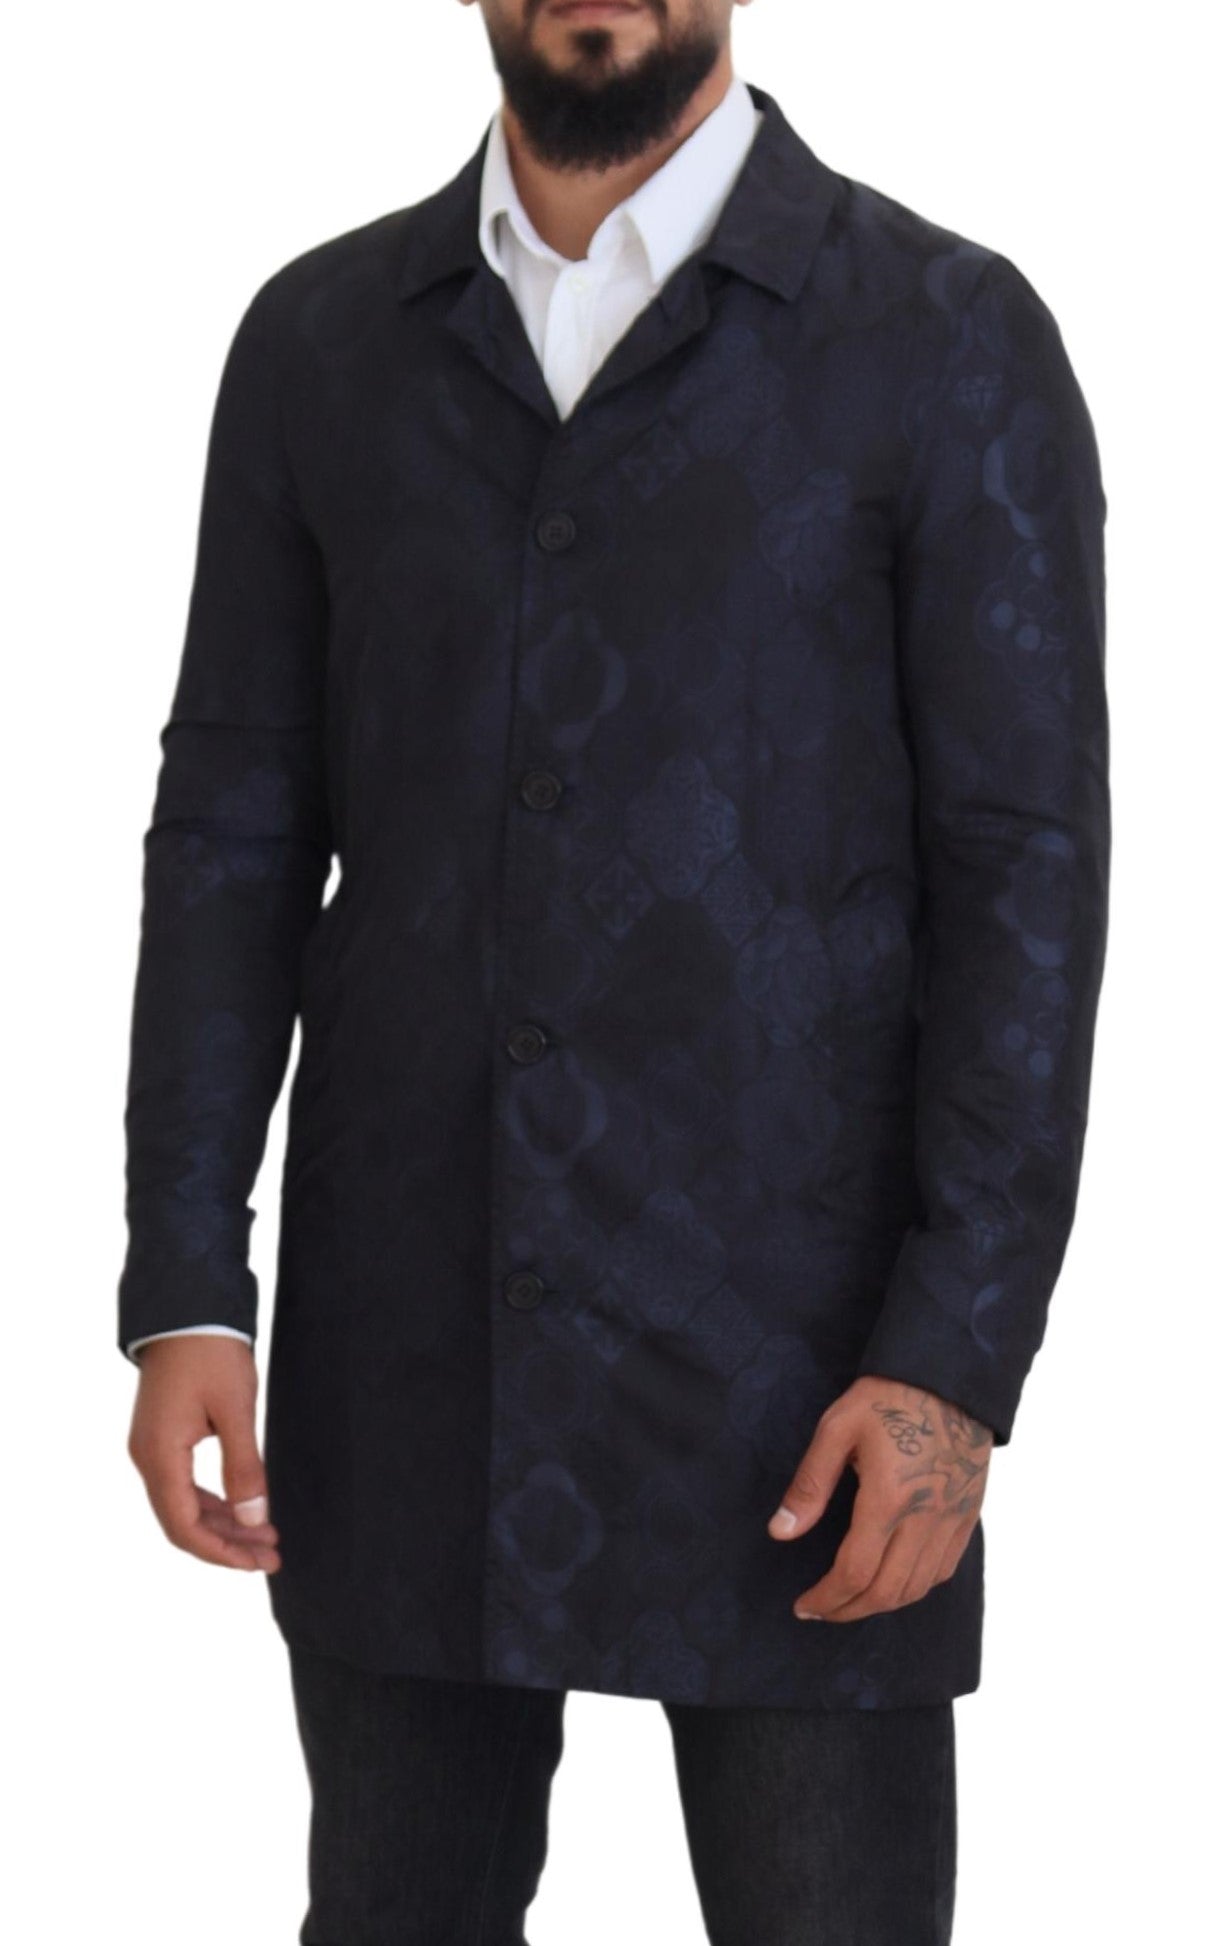 Exquisite Patterned Blue Coat Jacket